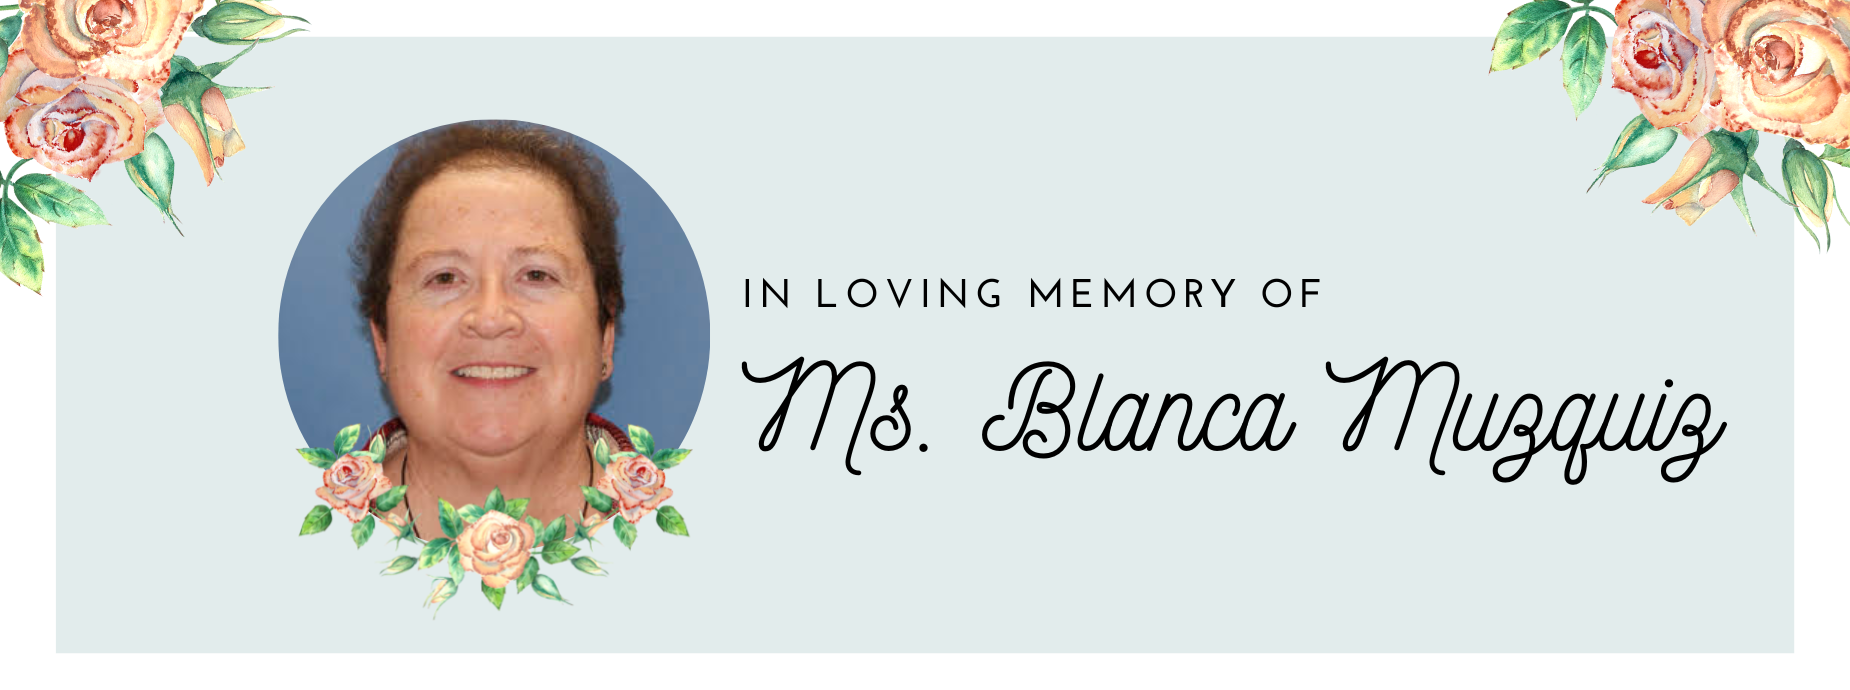 In Loving Memory of Ms. Blanca Muzquiz banner